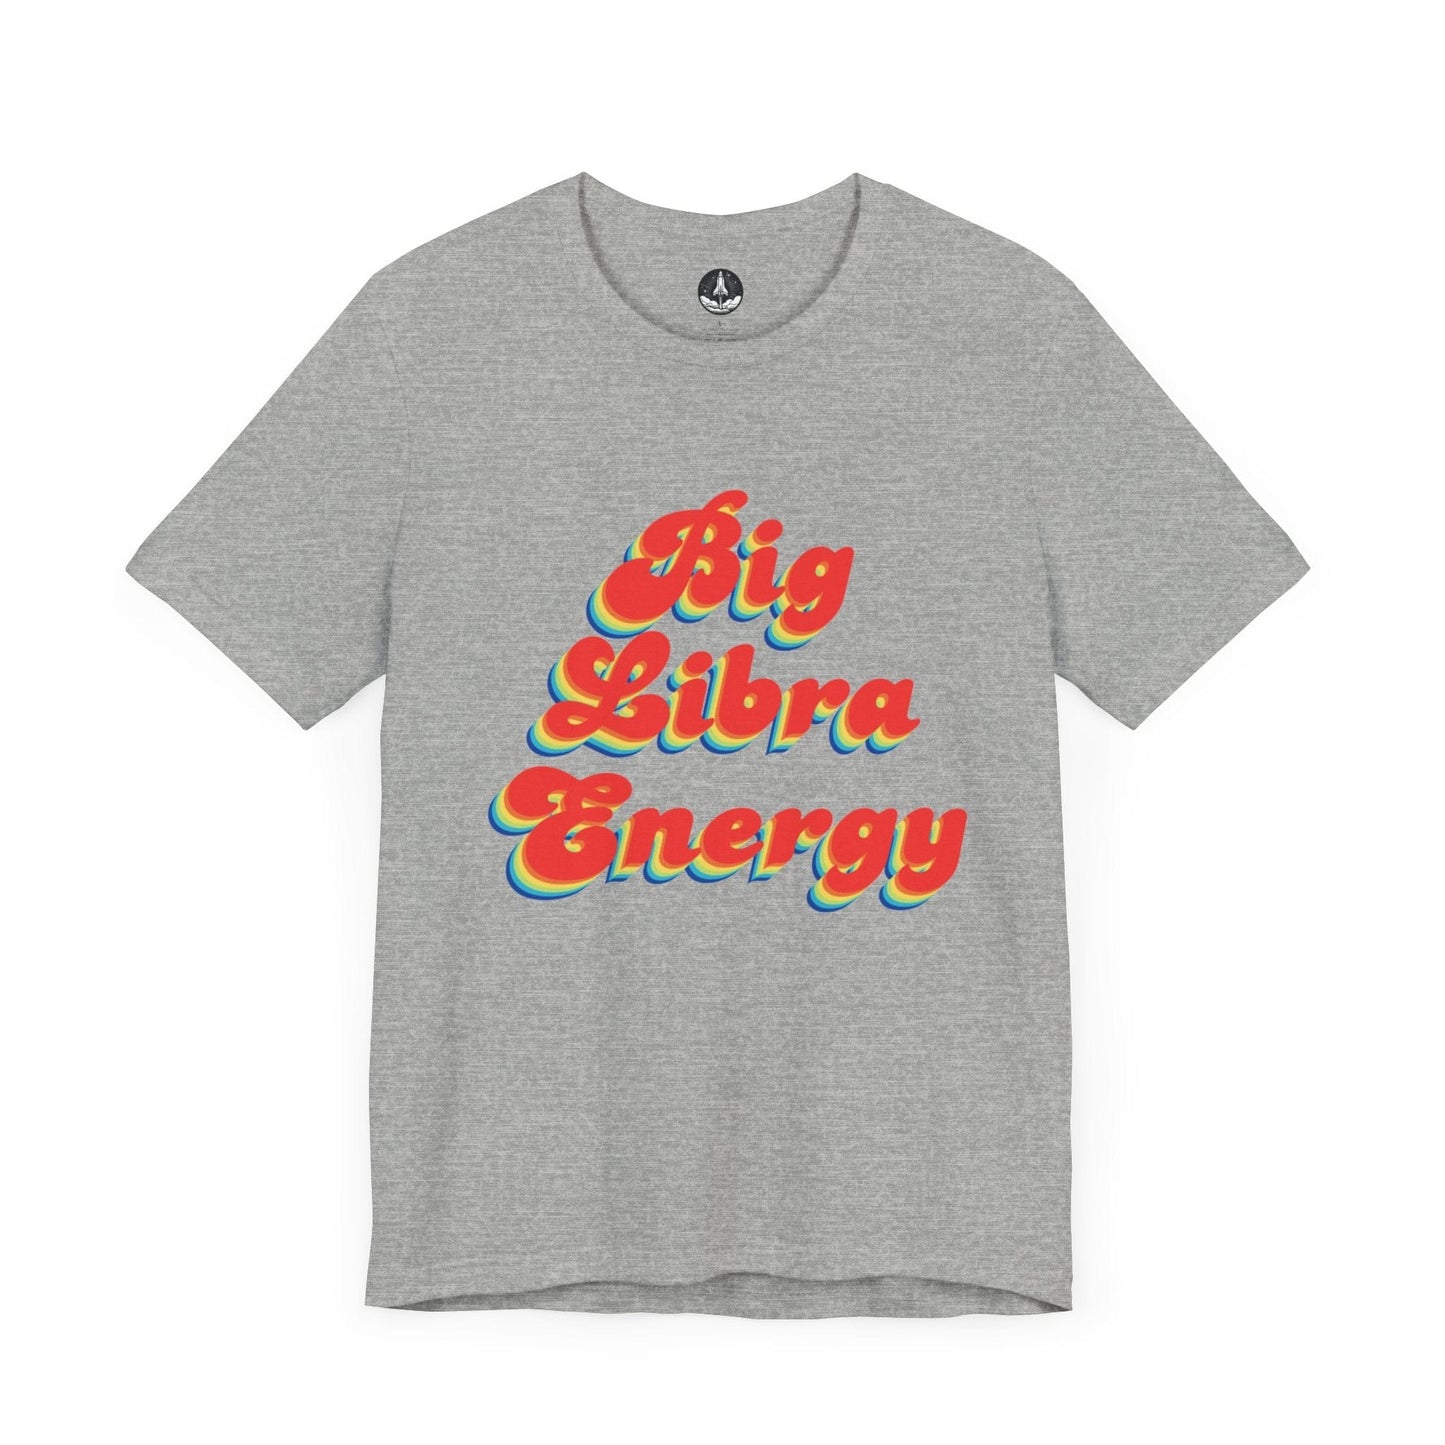 T-Shirt Athletic Heather / S Big Libra Energy Libra T-Shirt